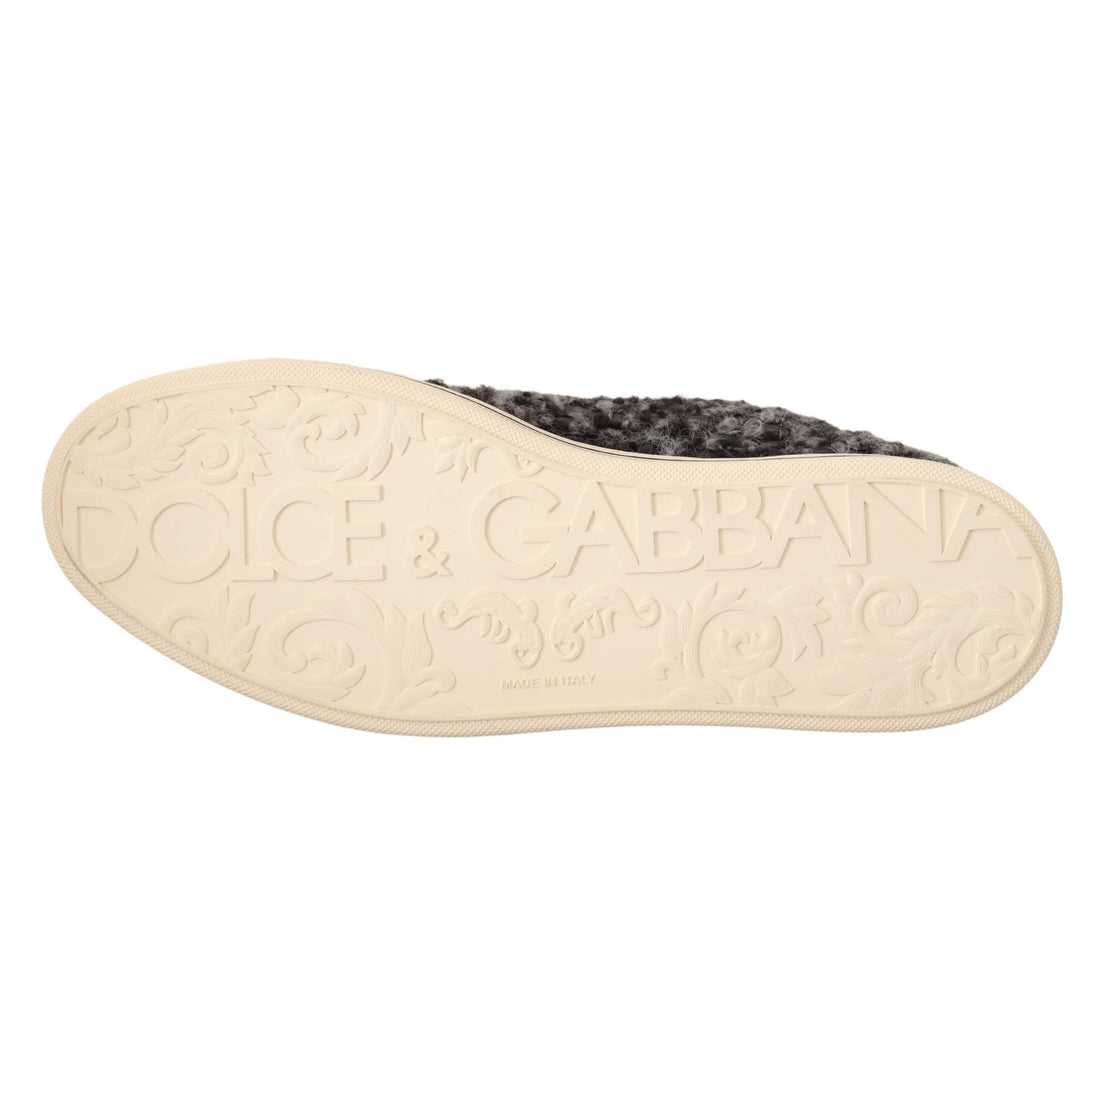 Dolce & Gabbana Elegant Gray High Top Sneakers